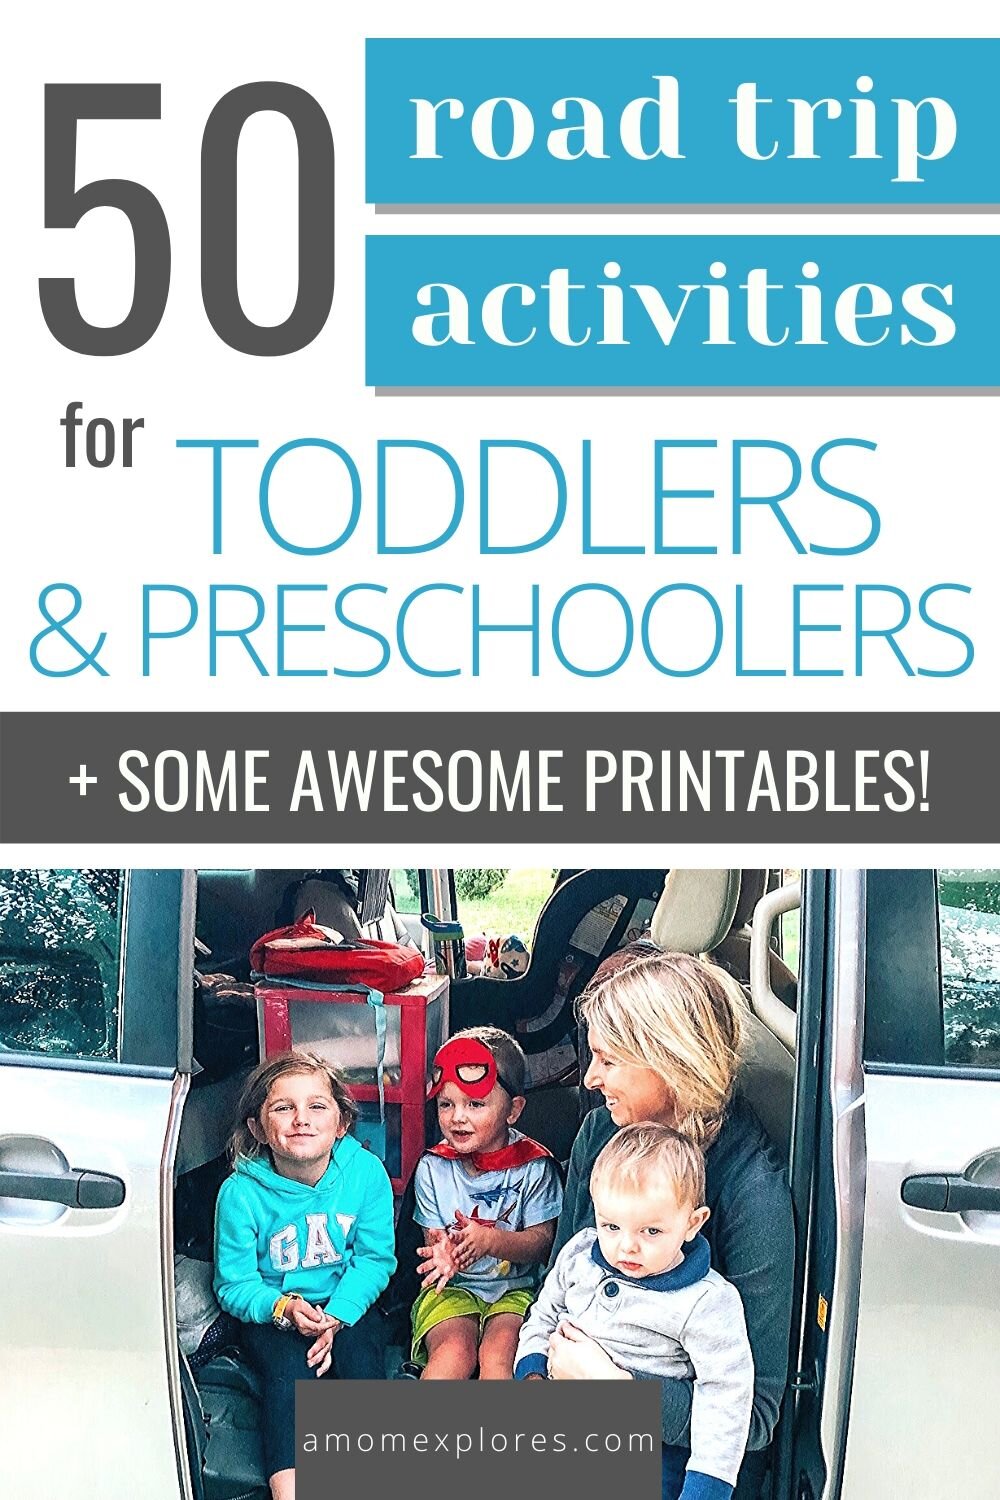 50 road trip activities for toddlers and preschoolers (1).jpg